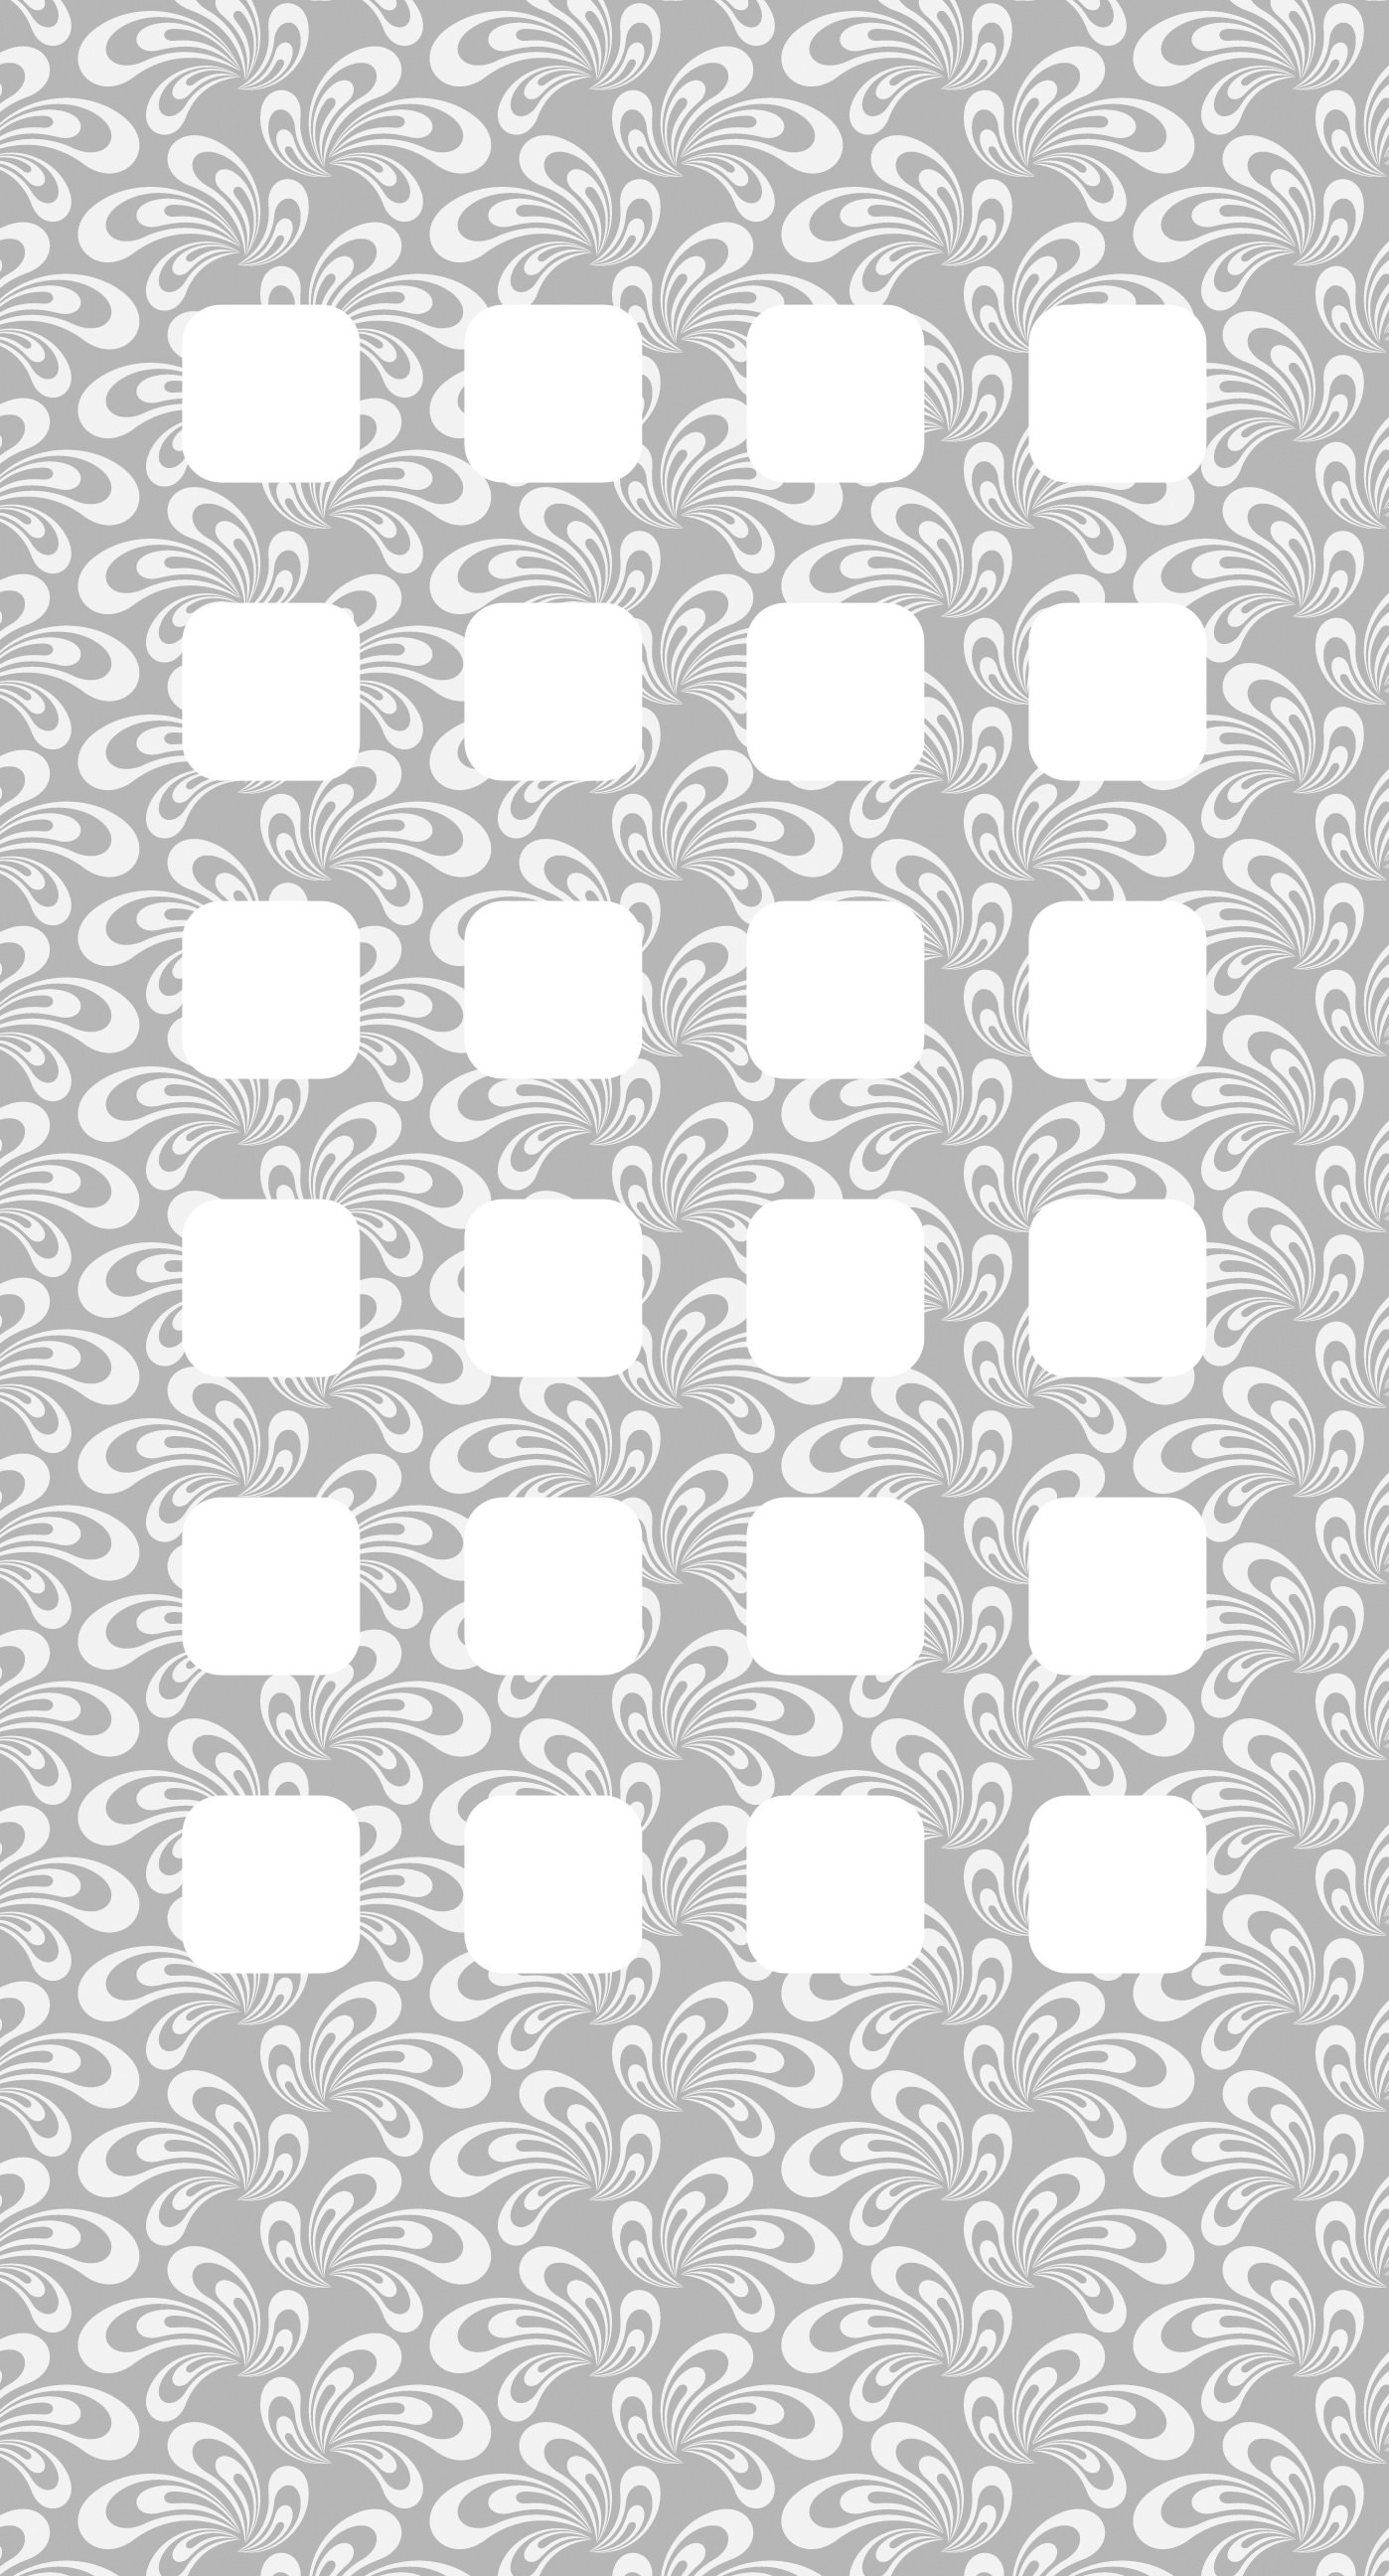 iPhone 8 Plus wallpaper